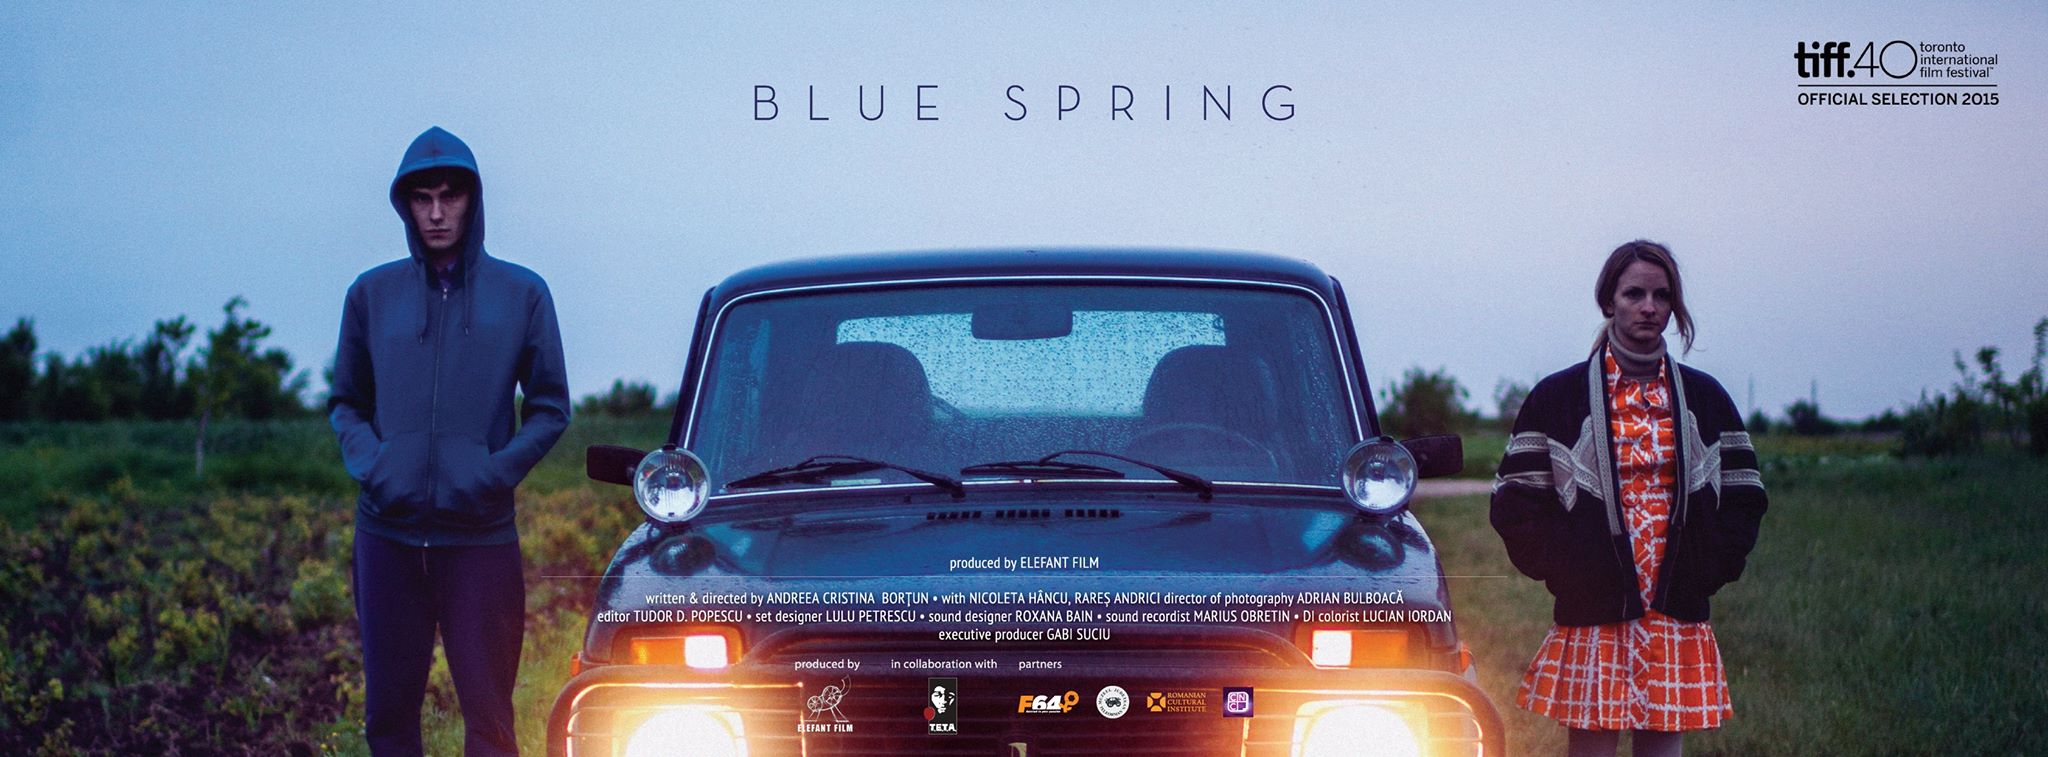 BLUE SPRING by Andreea Cristina Bortun #TIFF15 #ShortCuts | SEP 11 & 18